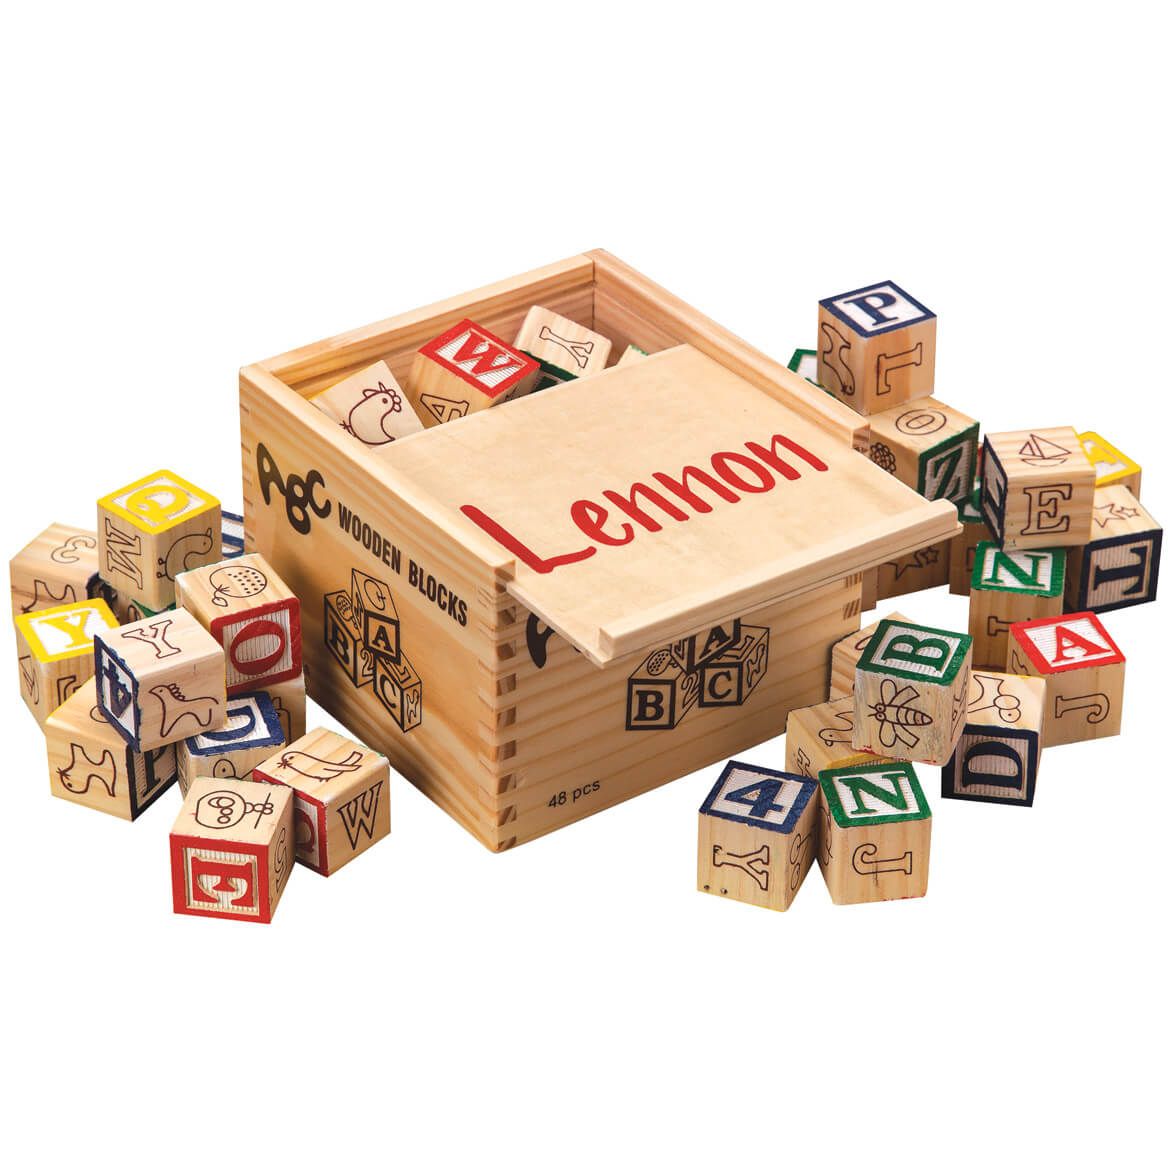 Personalized Box Of Blocks + '-' + 311643